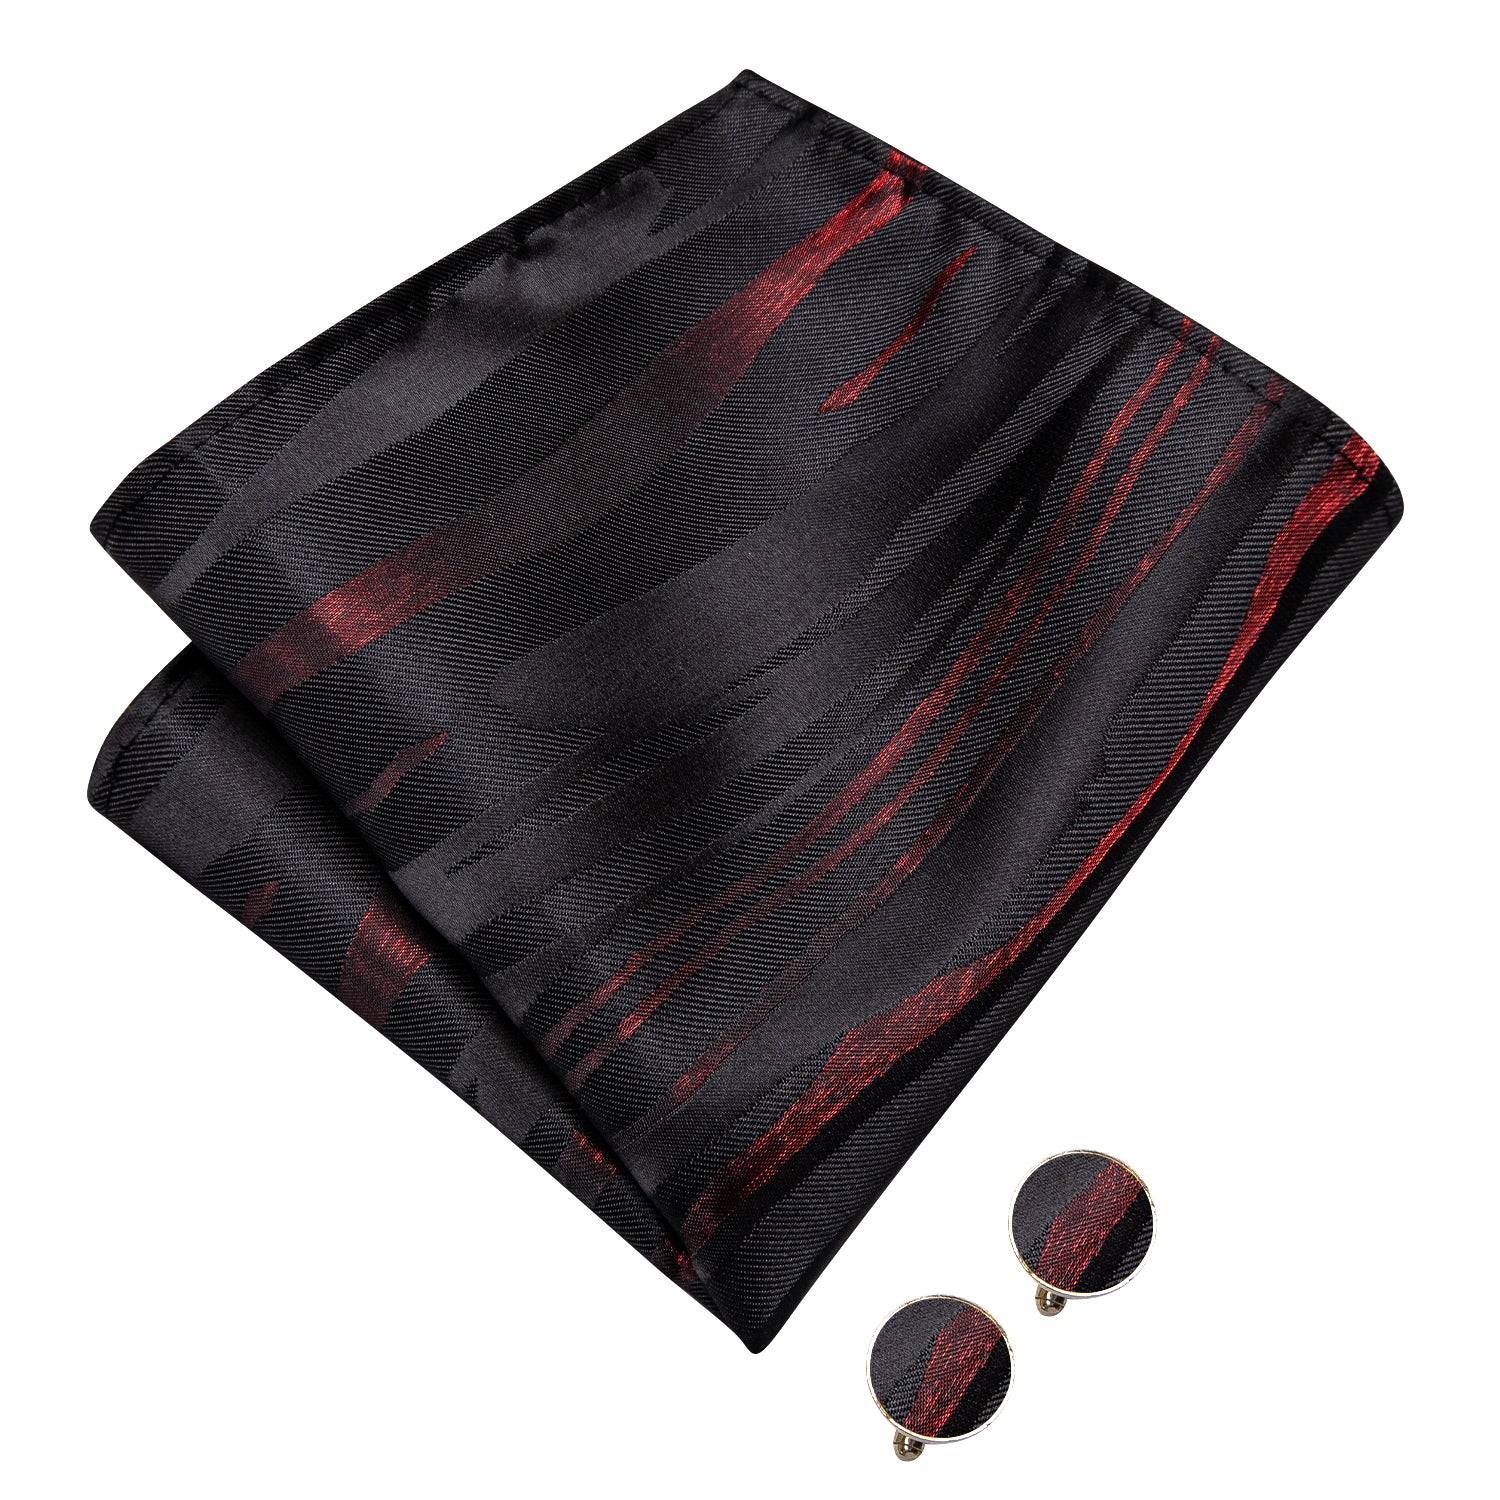 Black Red Striped Pre-tied Bow Tie Hanky Cufflinks Set